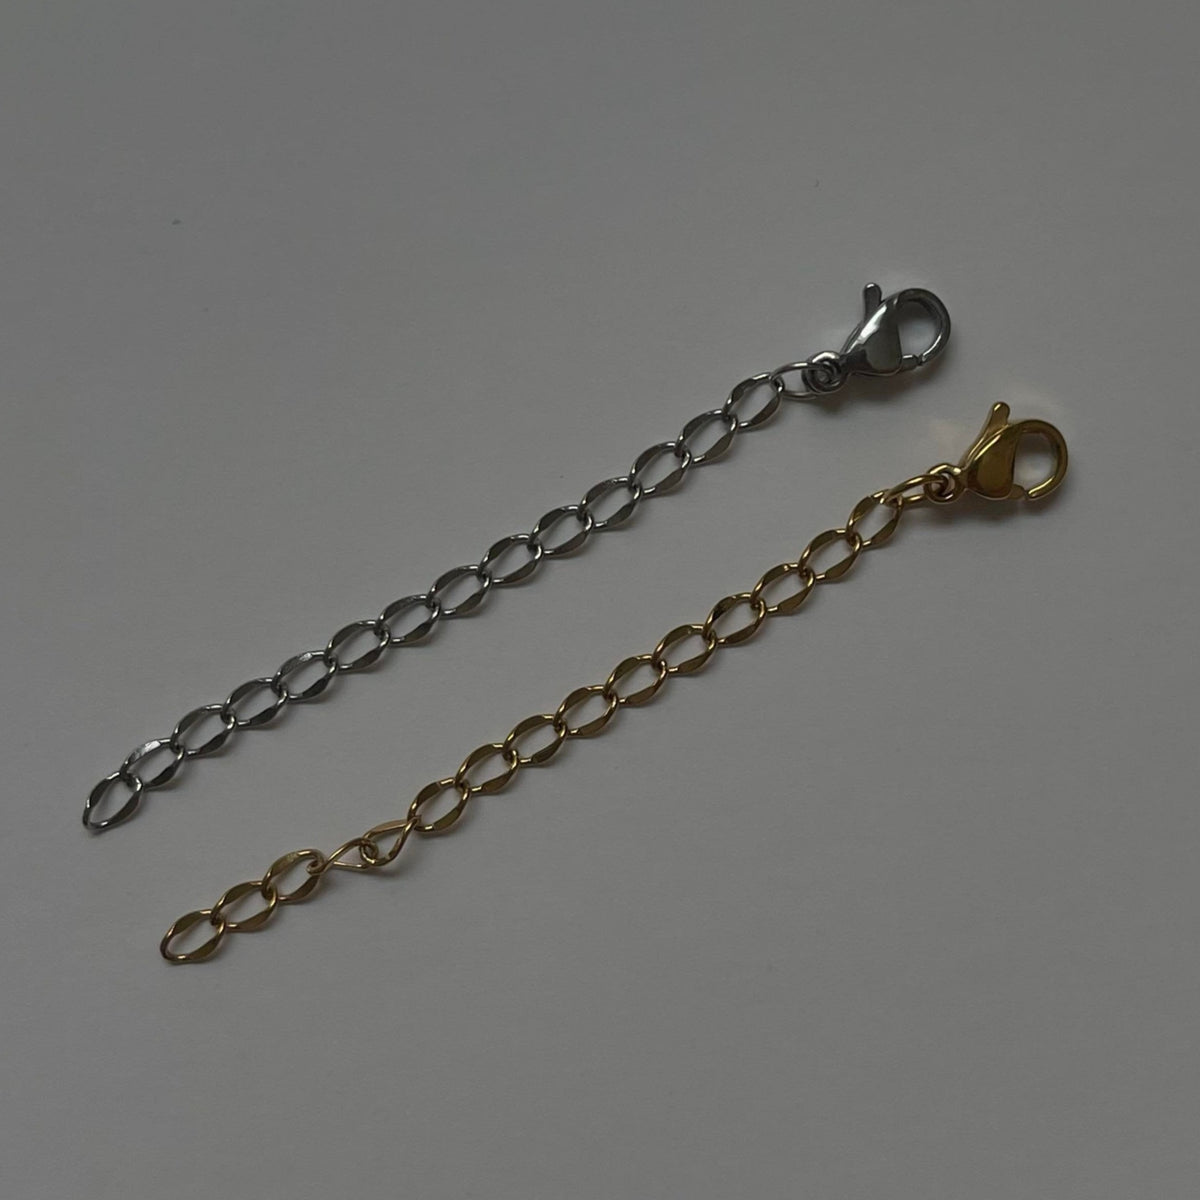 Chain extender